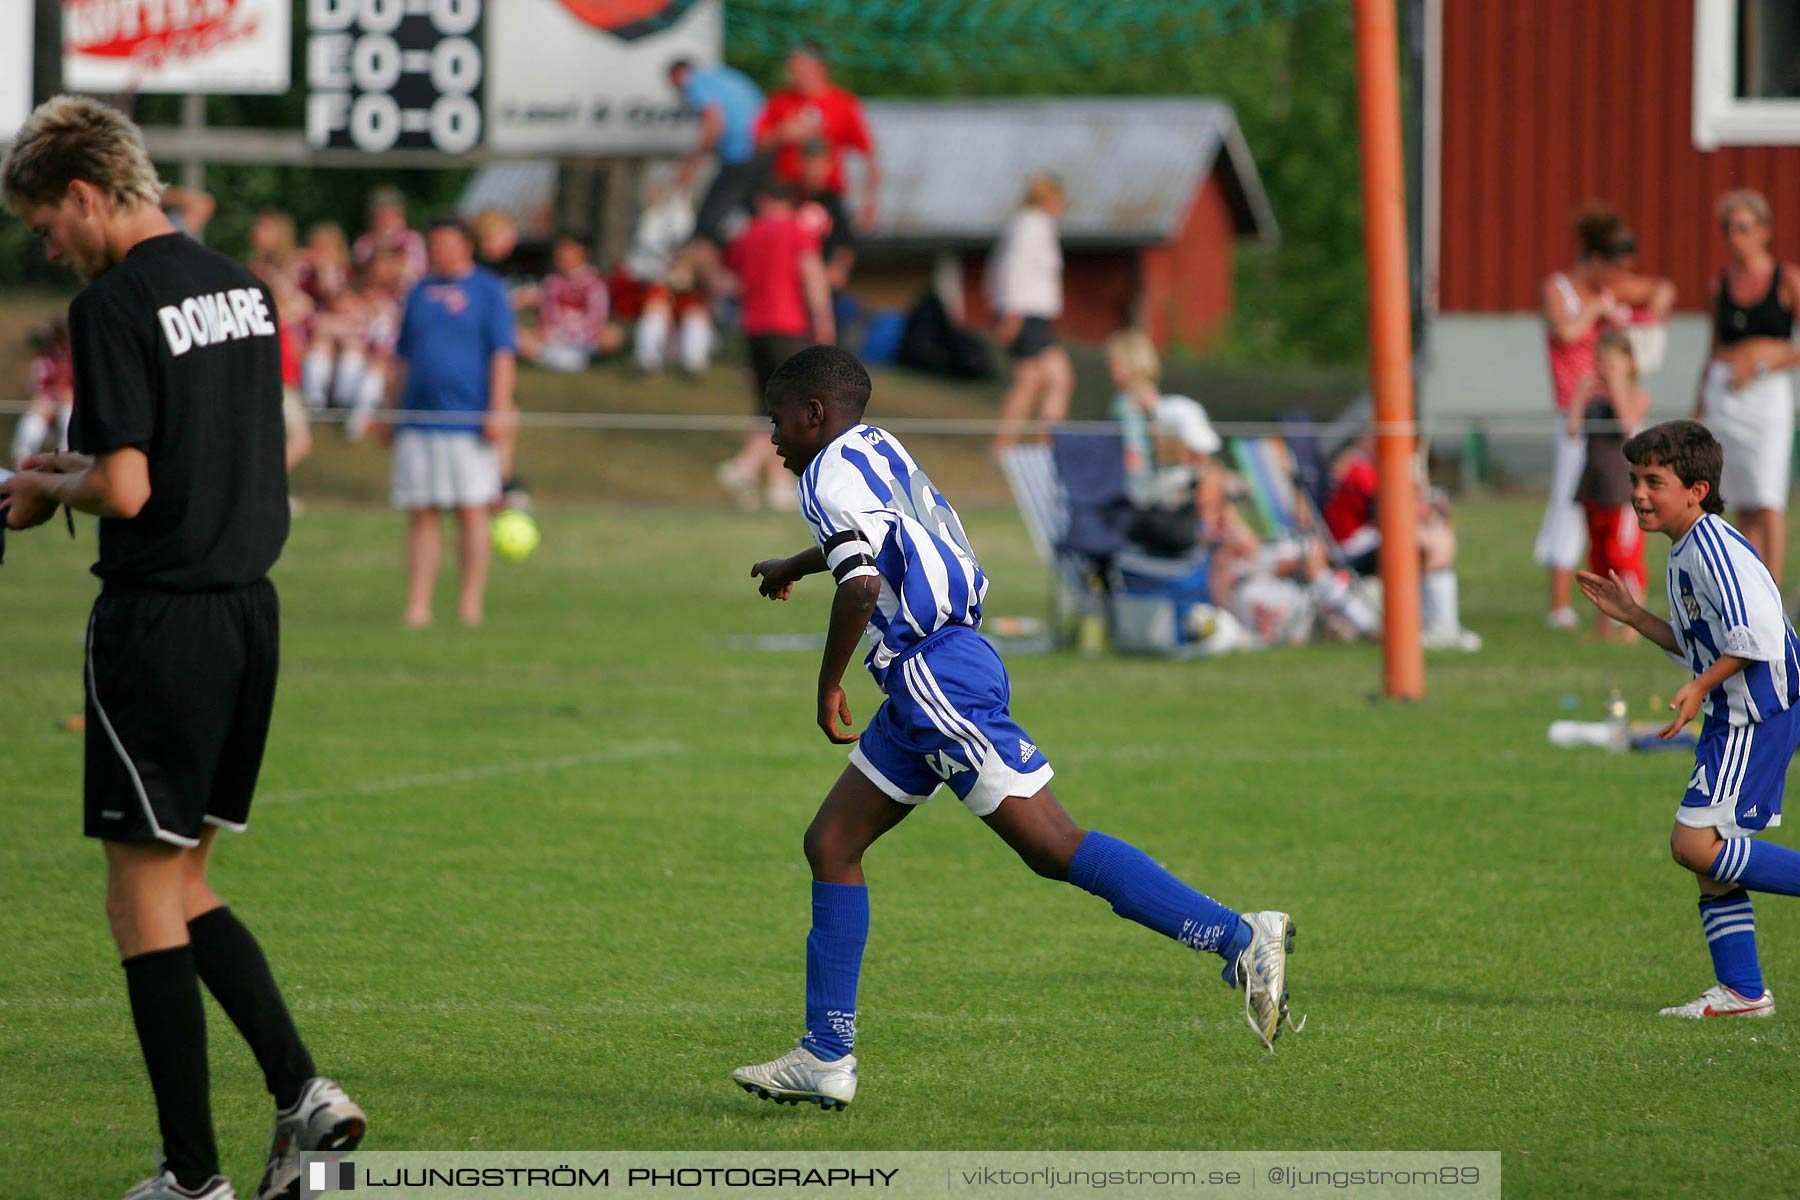 Ulvacupen 2006,mix,Åbrovallen,Ulvåker,Sverige,Fotboll,,2006,147445